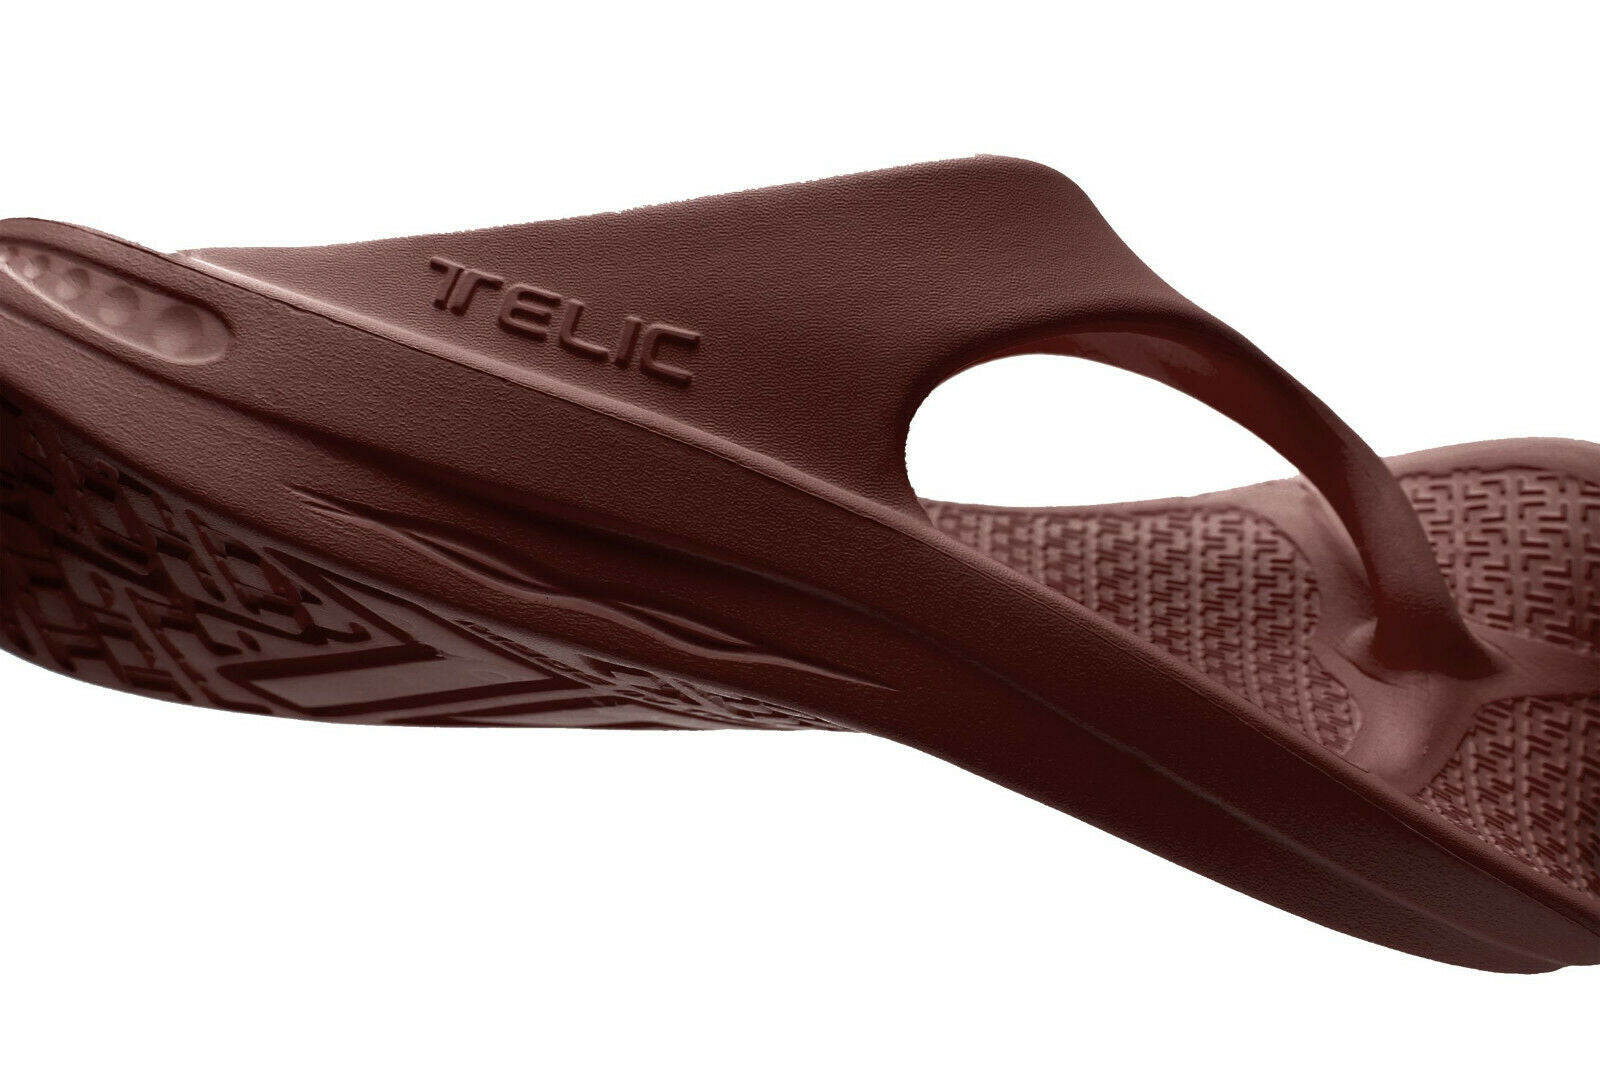 TELIC Recovery Comfort Flip Flop Lightweight Waterproof Sandal Espresso Brown